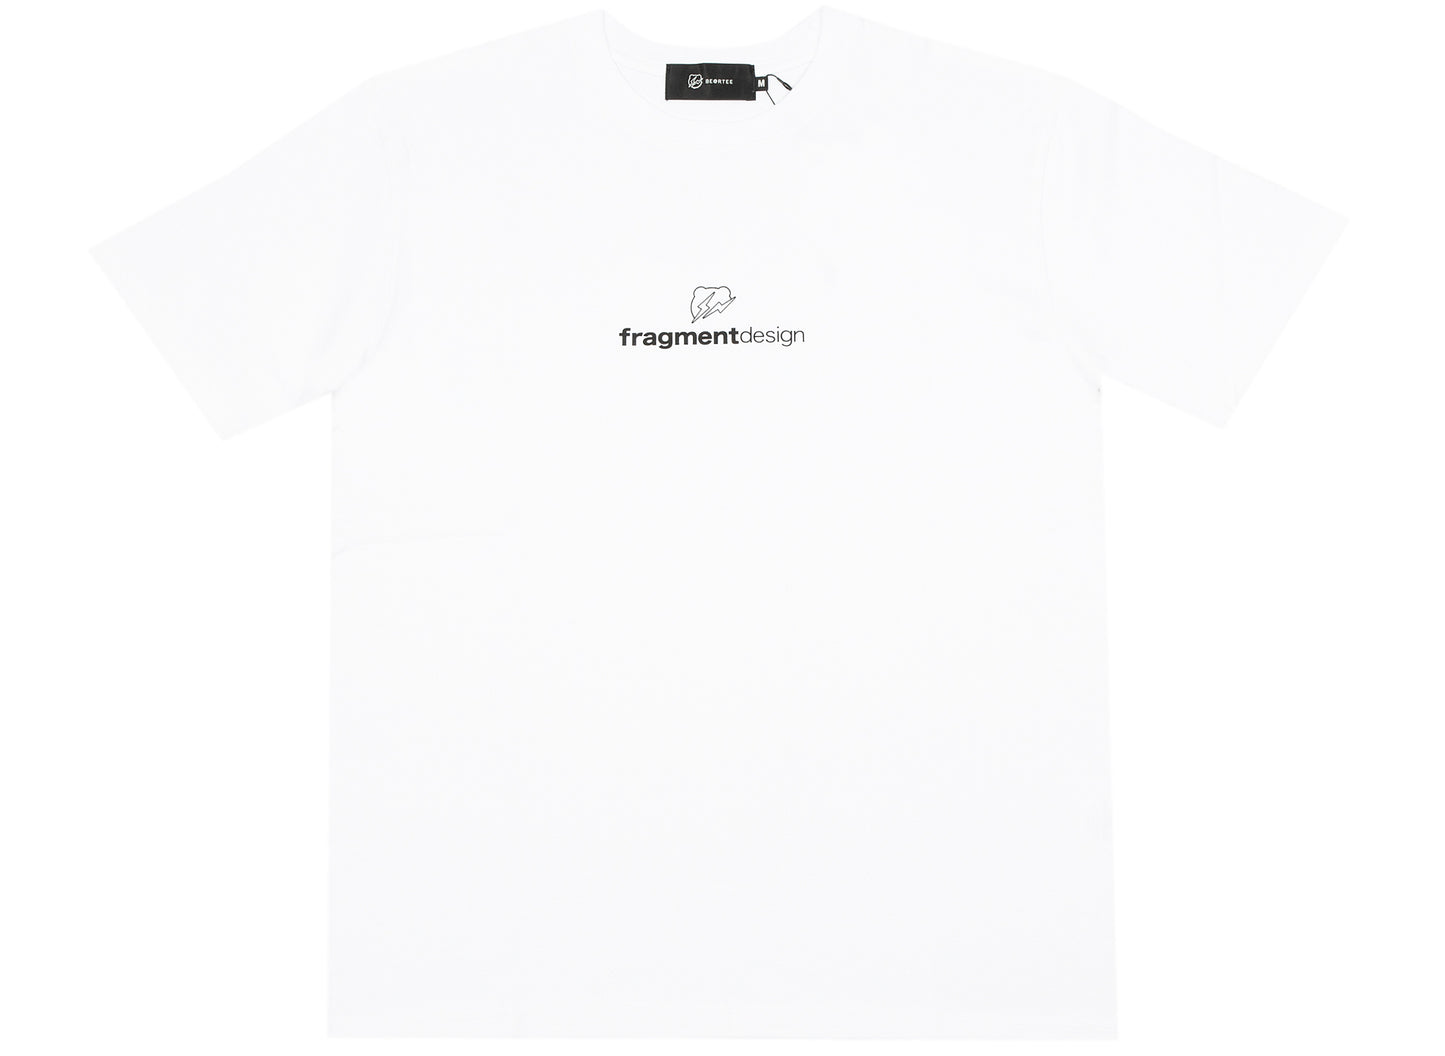 Medicom Toy Be@rtree x fragmentdesign Logo Tee in White